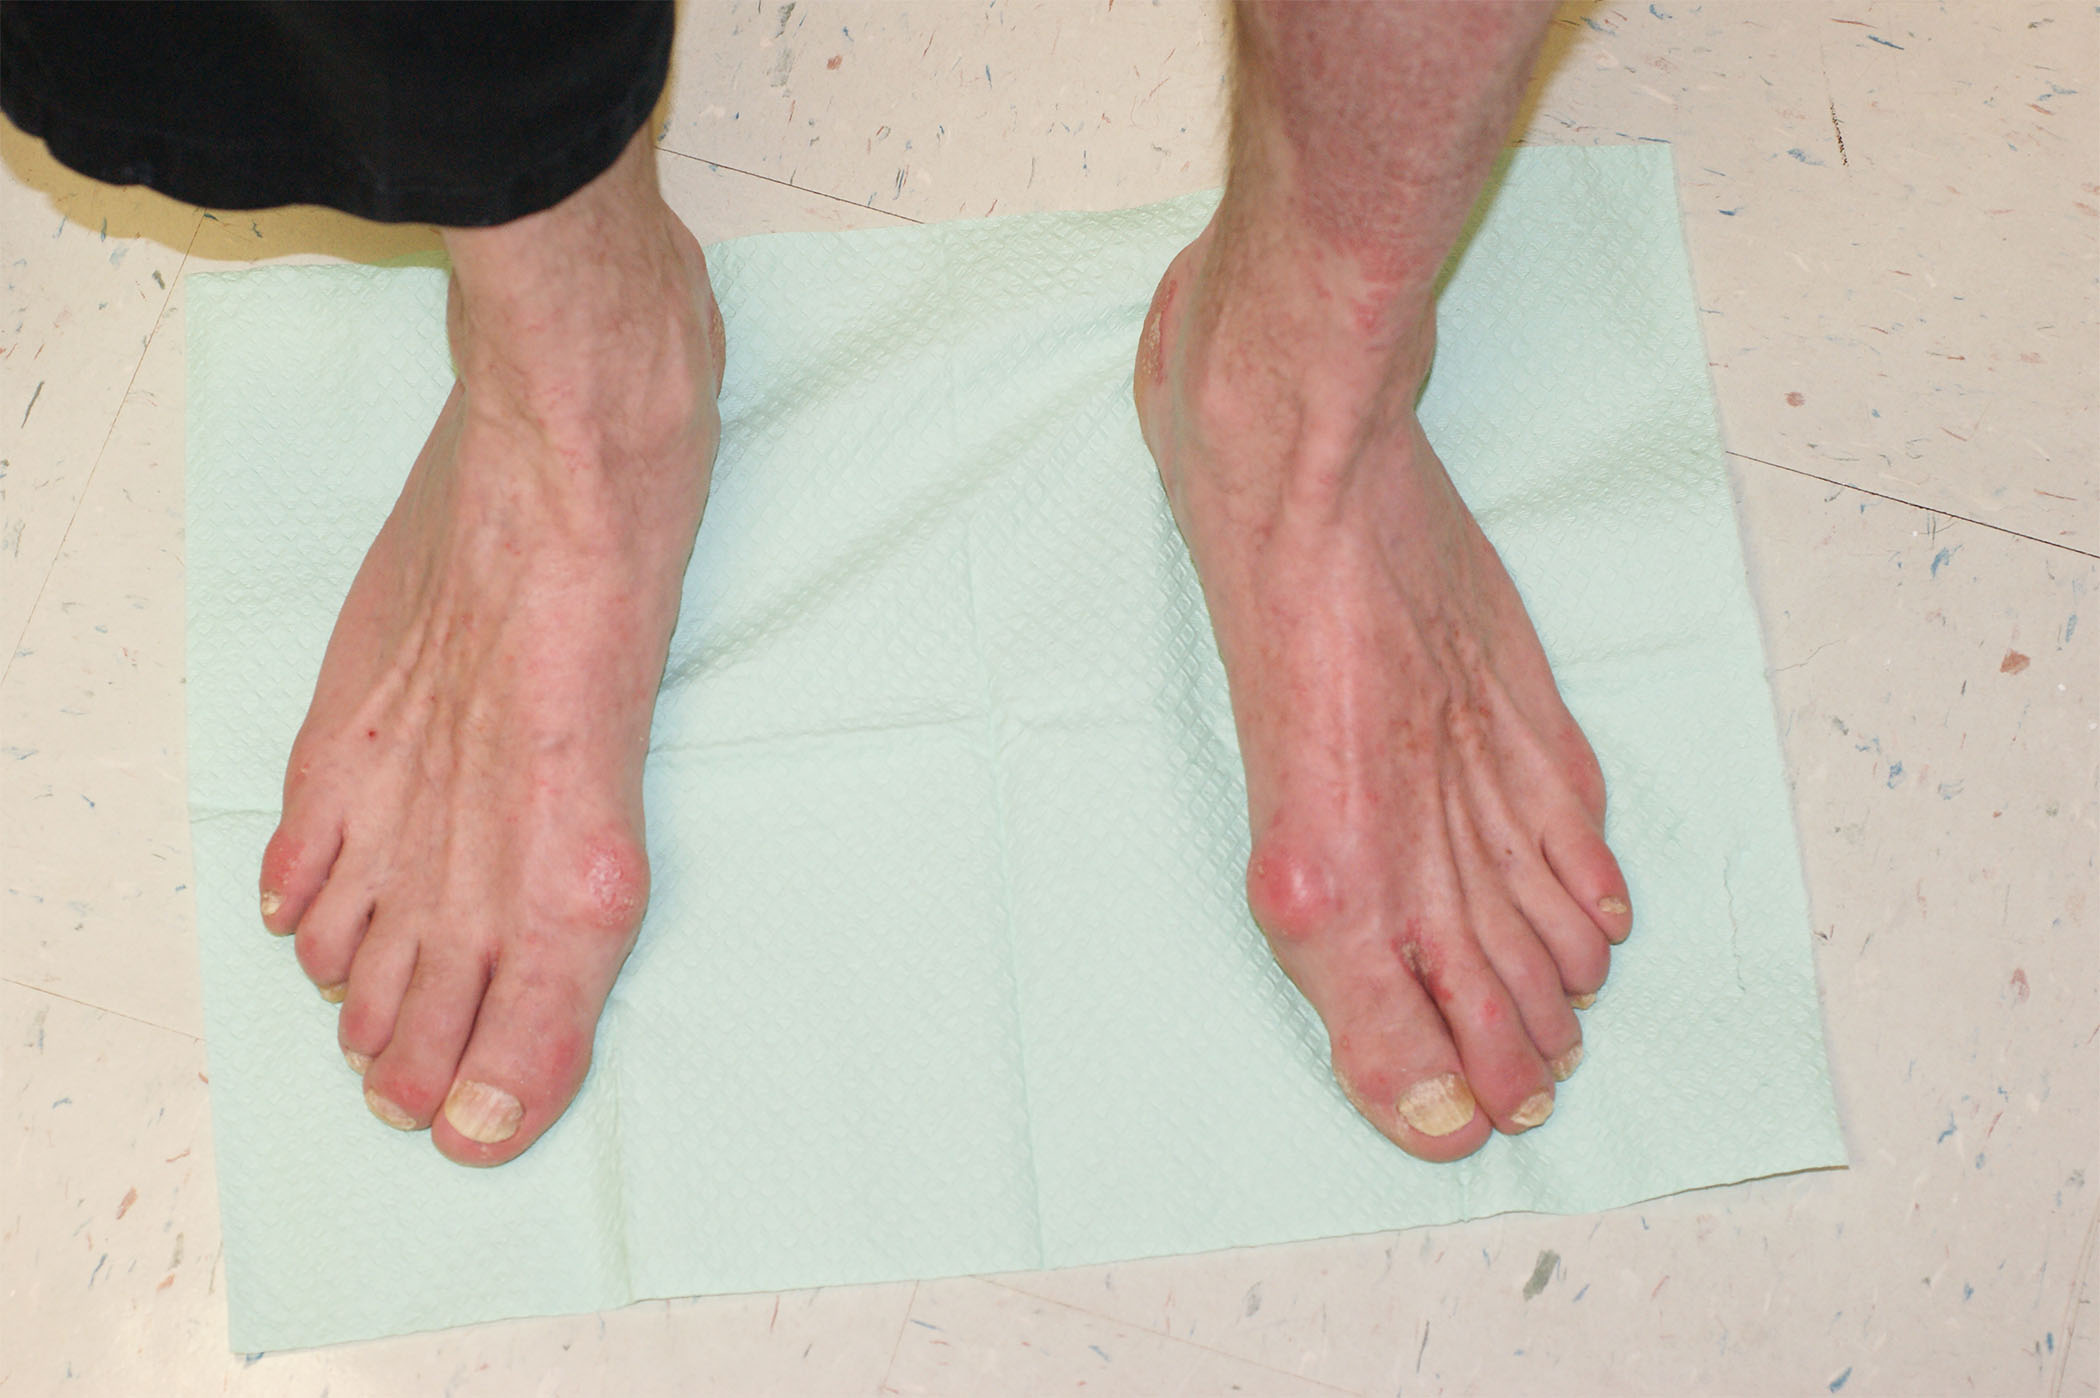 foot neuropathy